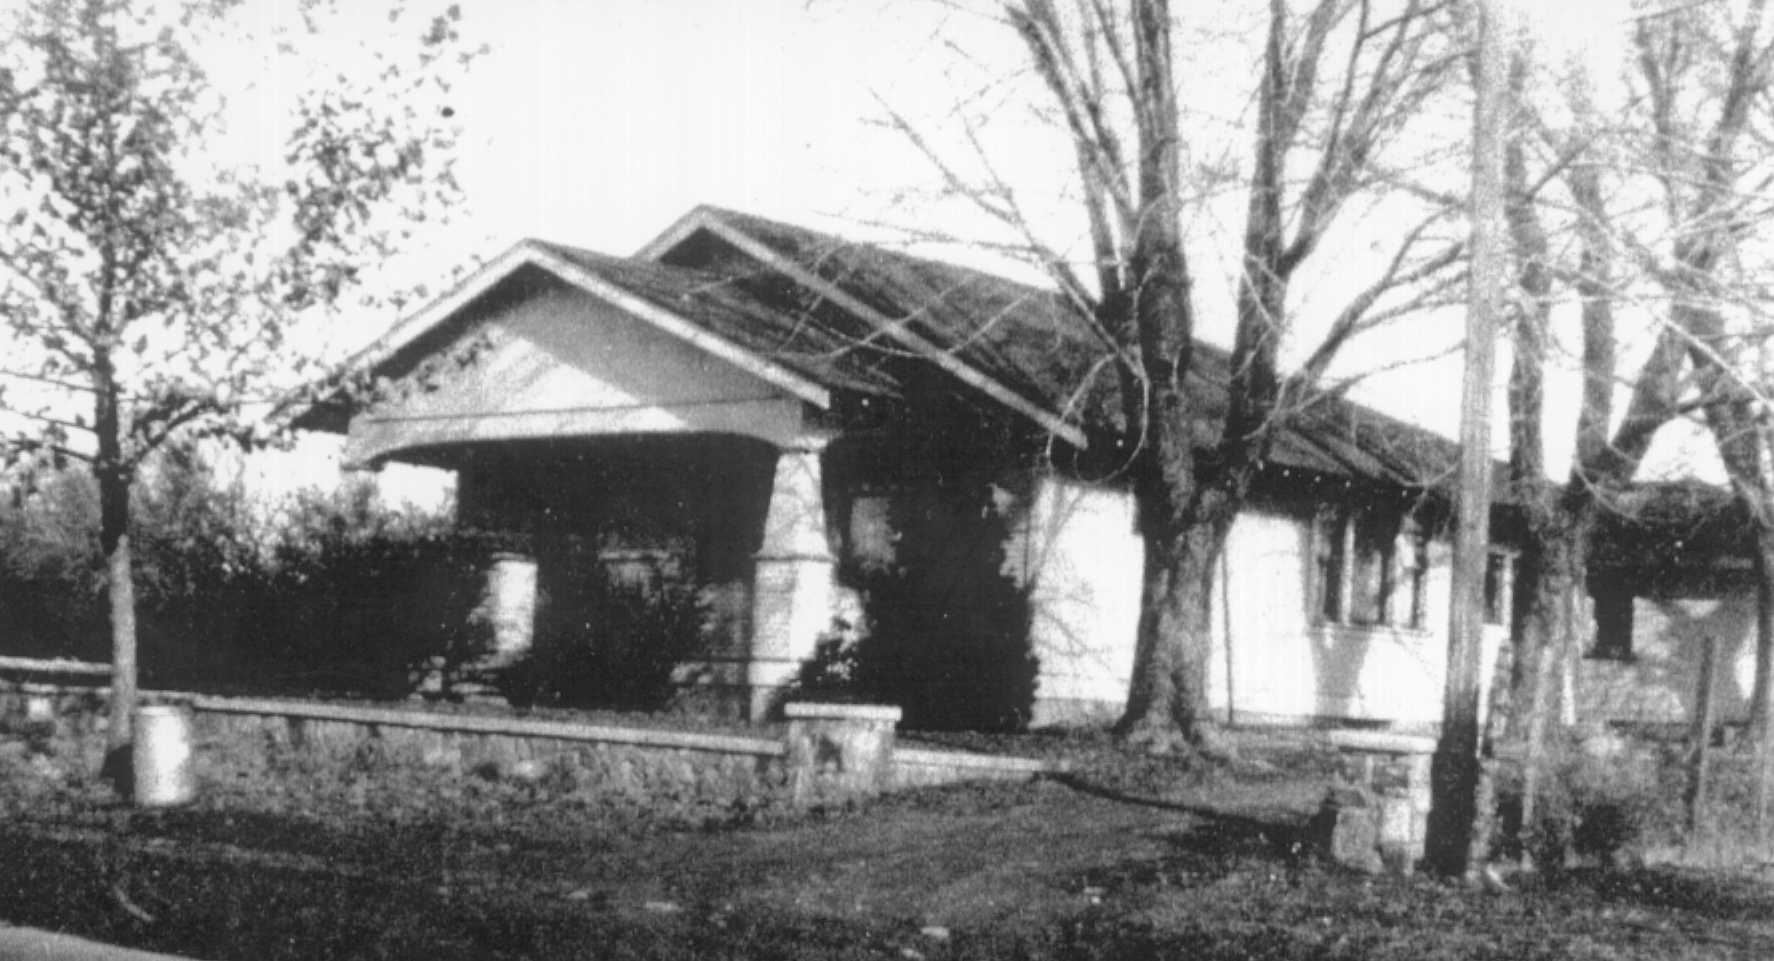 Home of Fannie Brown Clark and Joseph Albert Clark